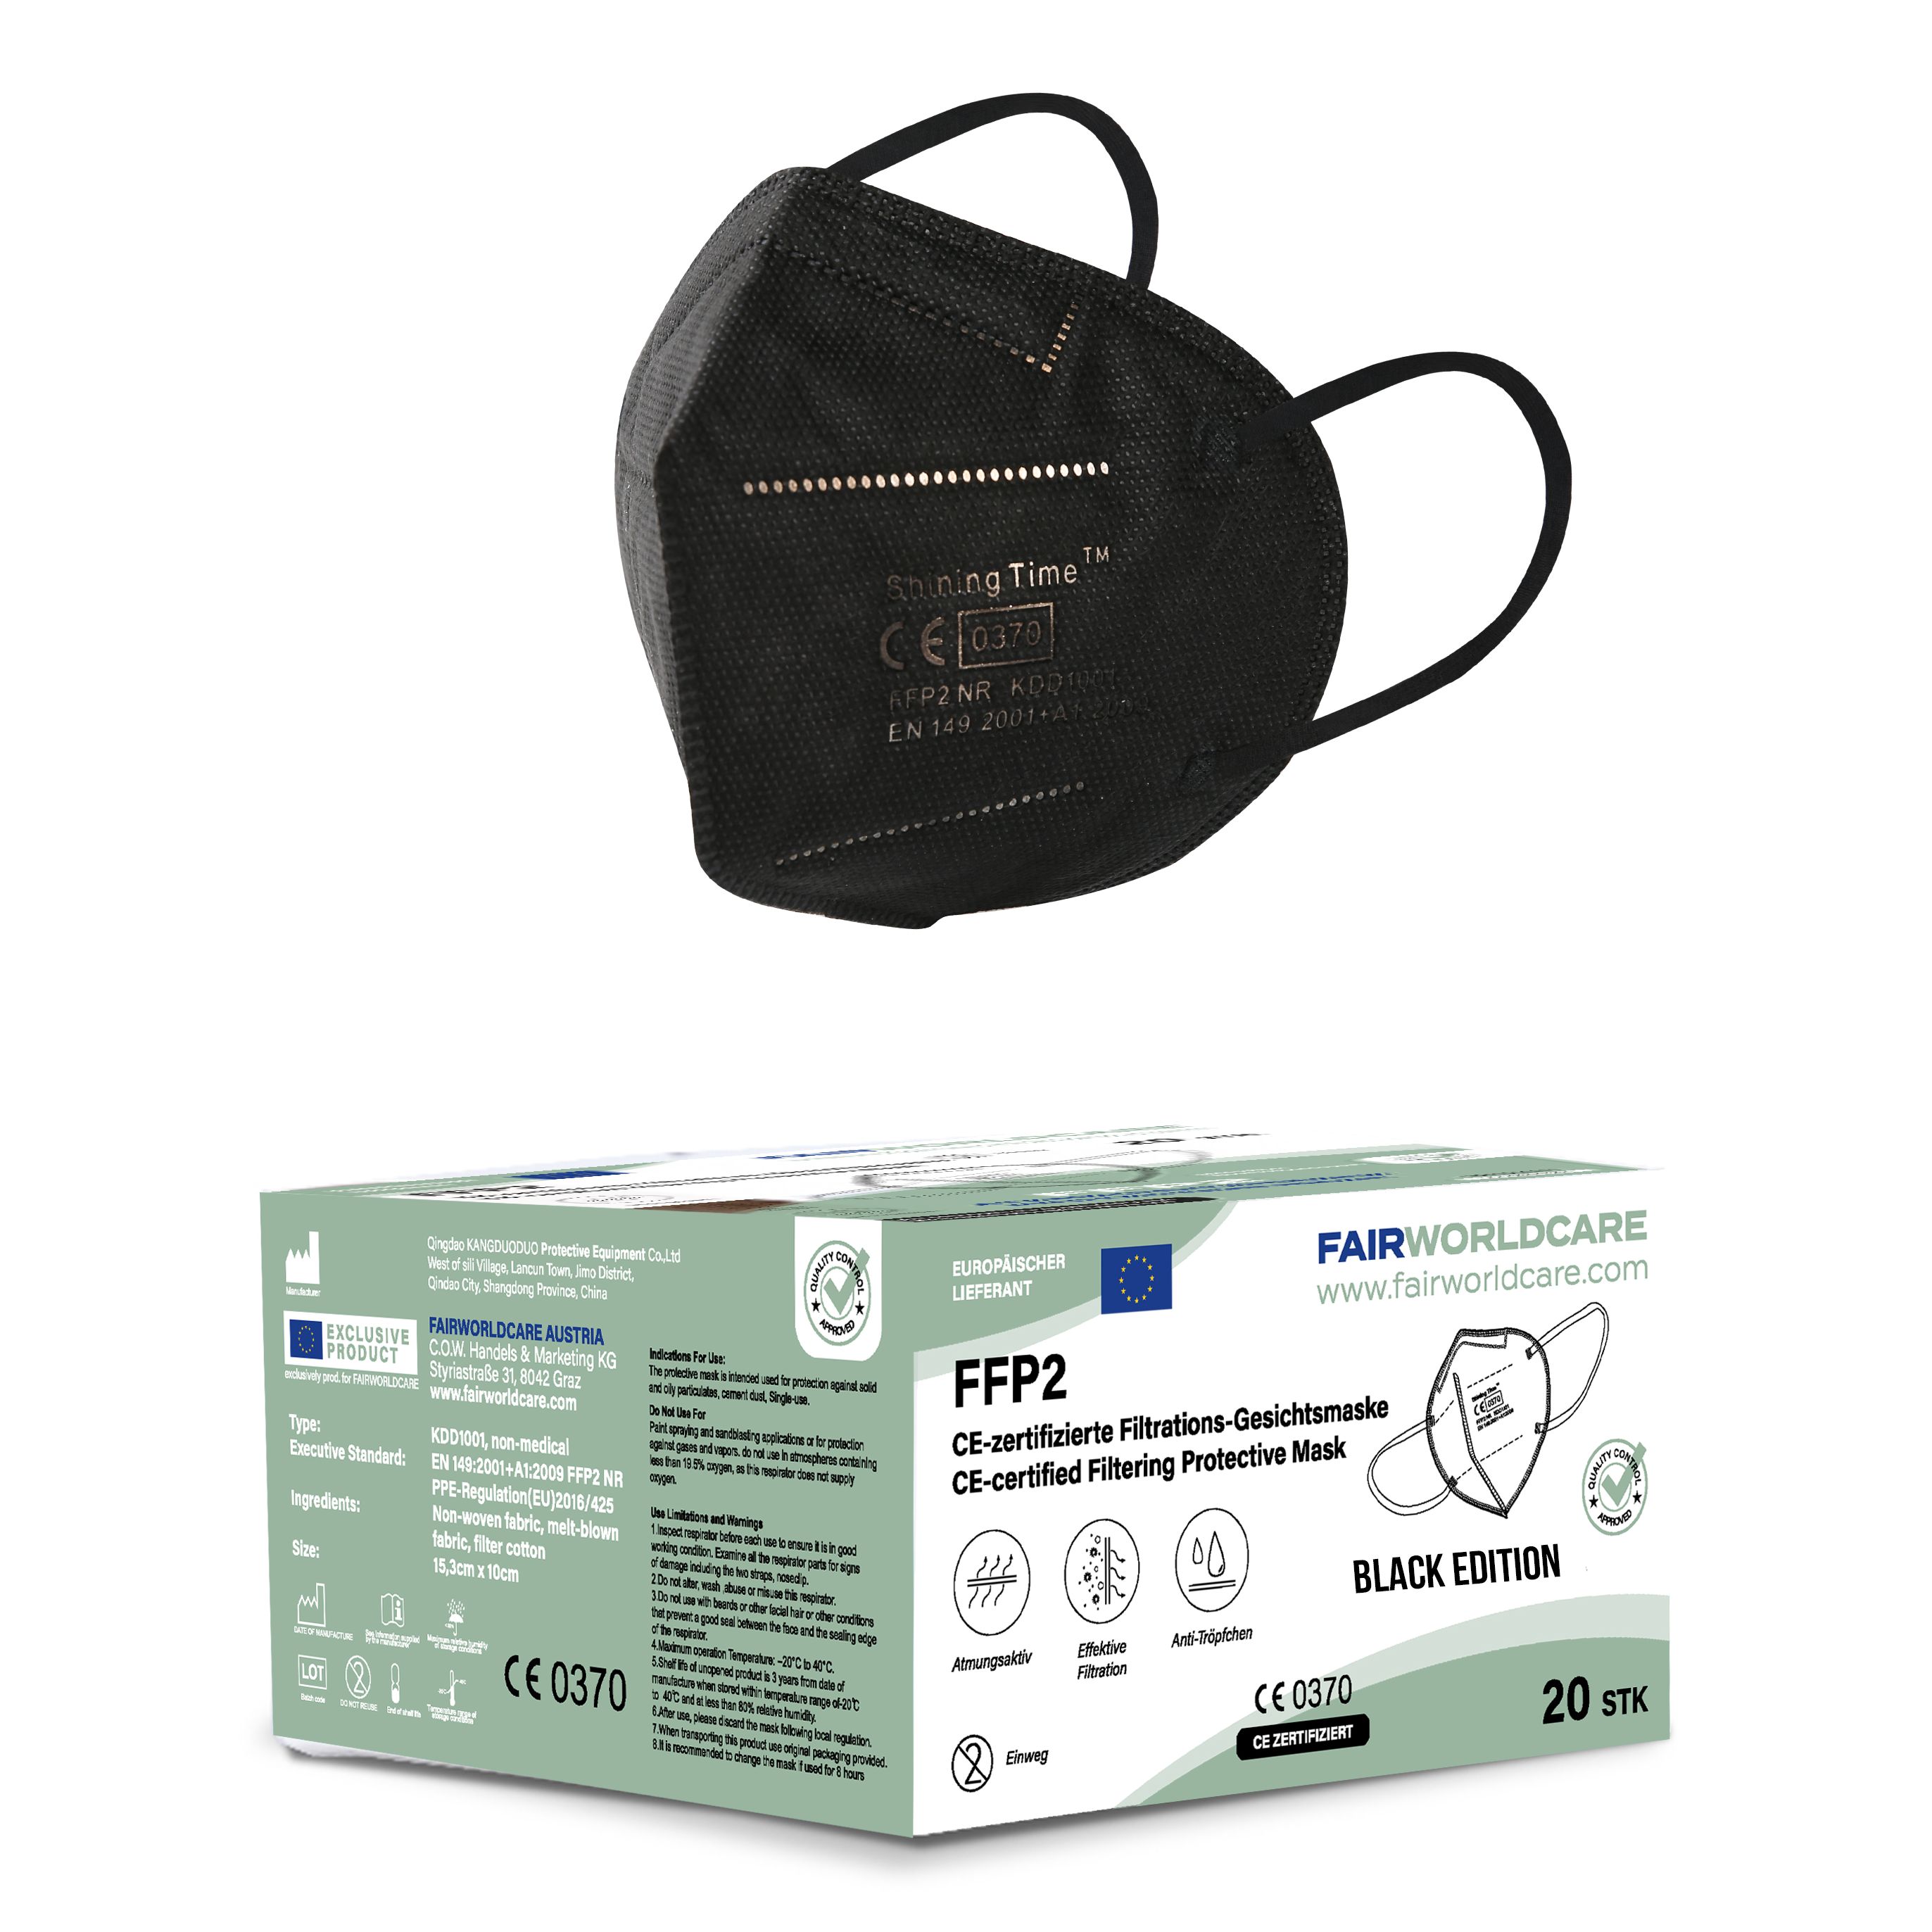 BLACK EDITION: FFP2 Atemschutzmasken, CE zertifiziert in der EU, 20 Stück Packung